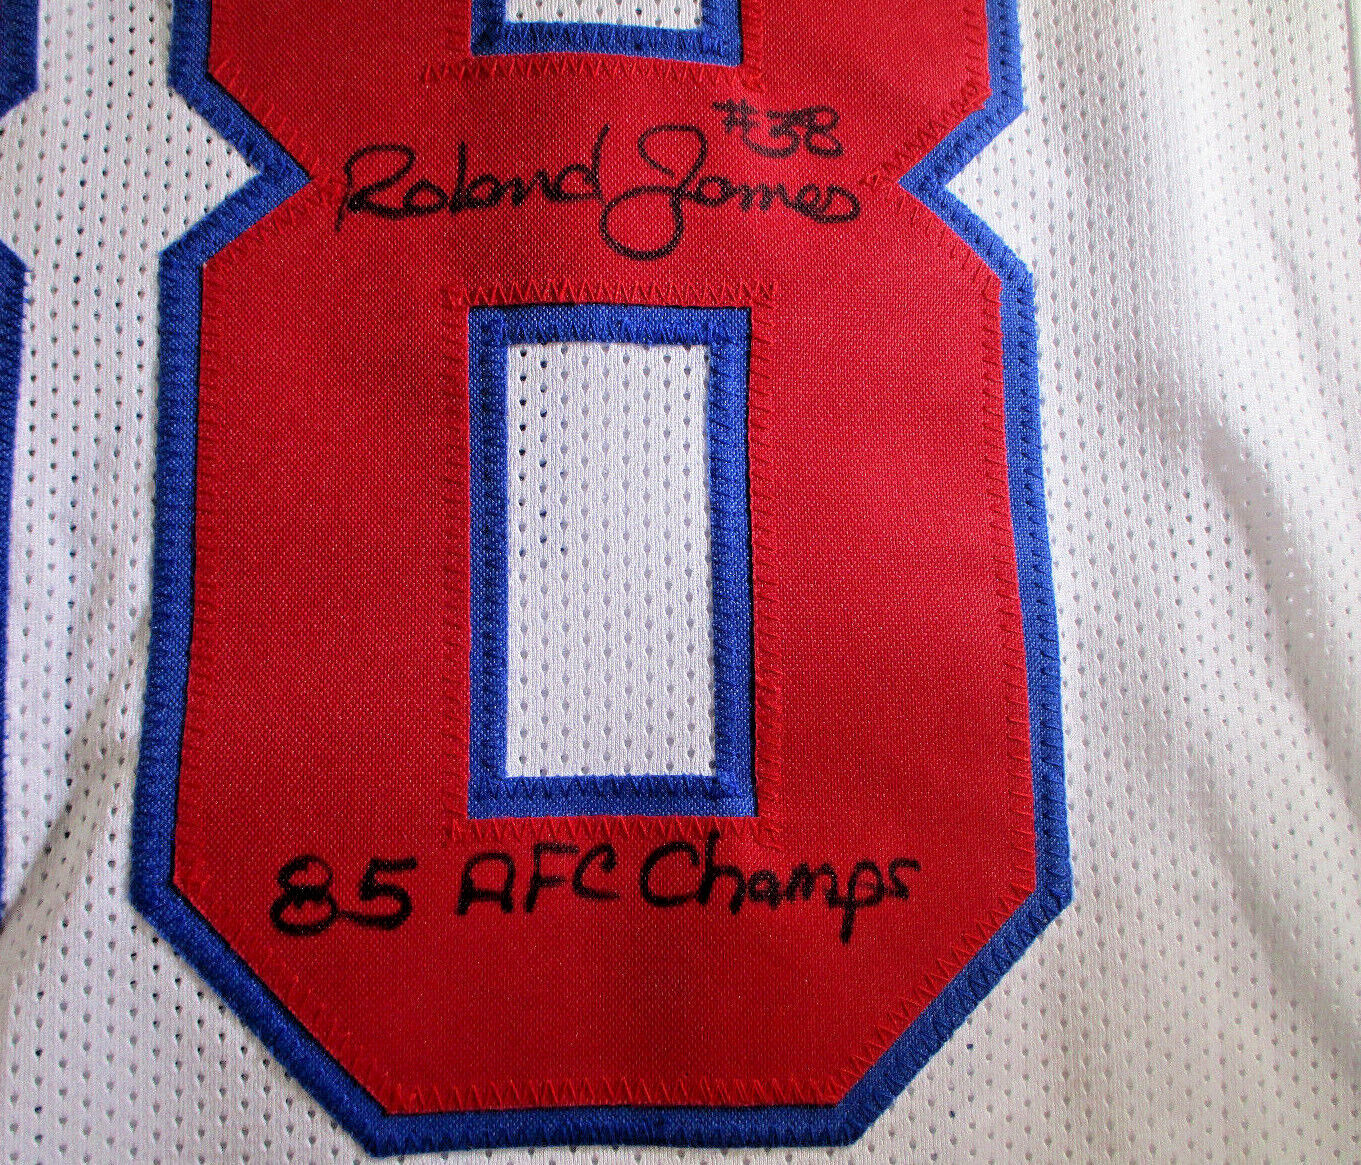 Roland James / Autographed New England Patriots Custom Jersey  / JSA Witnessd